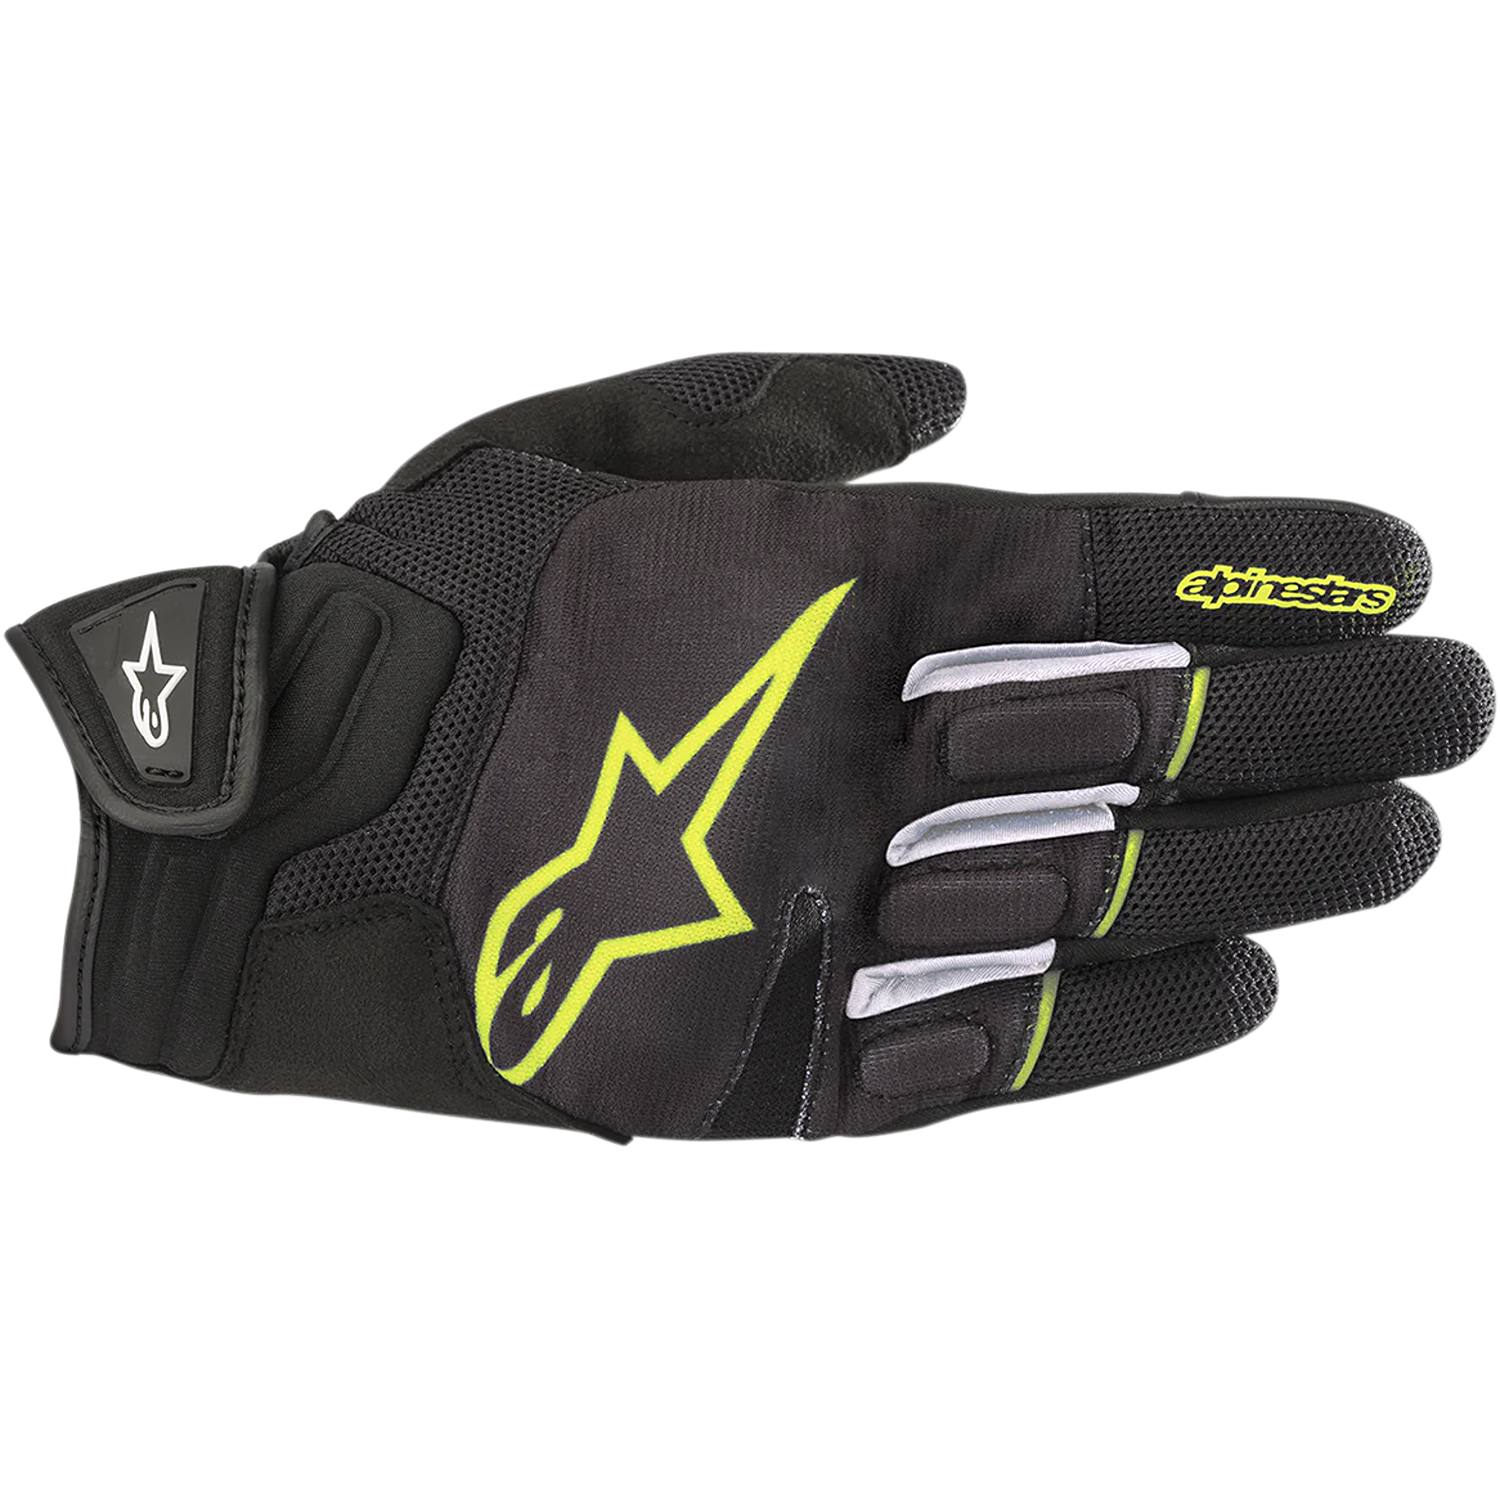 Image of Alpinestars Atom Gloves Black Fluo Yellow Size M ID 8033637060279